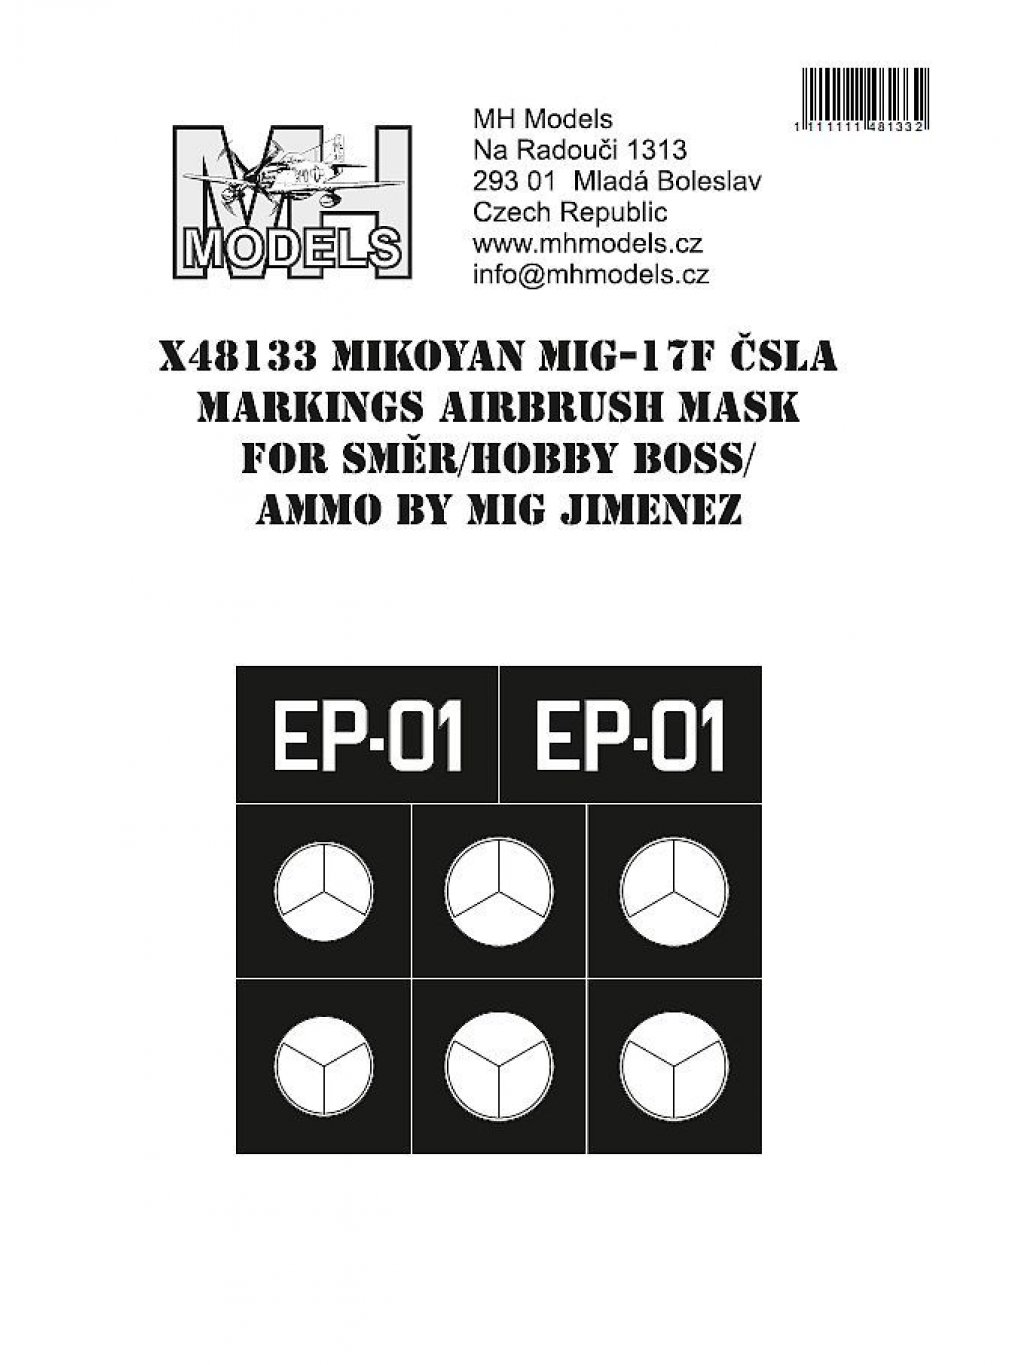 Mikoyan Mig-17F ČSLA Markings airbrush mask for Směr/Hobbyboss/Ammo by Mig Jimenez